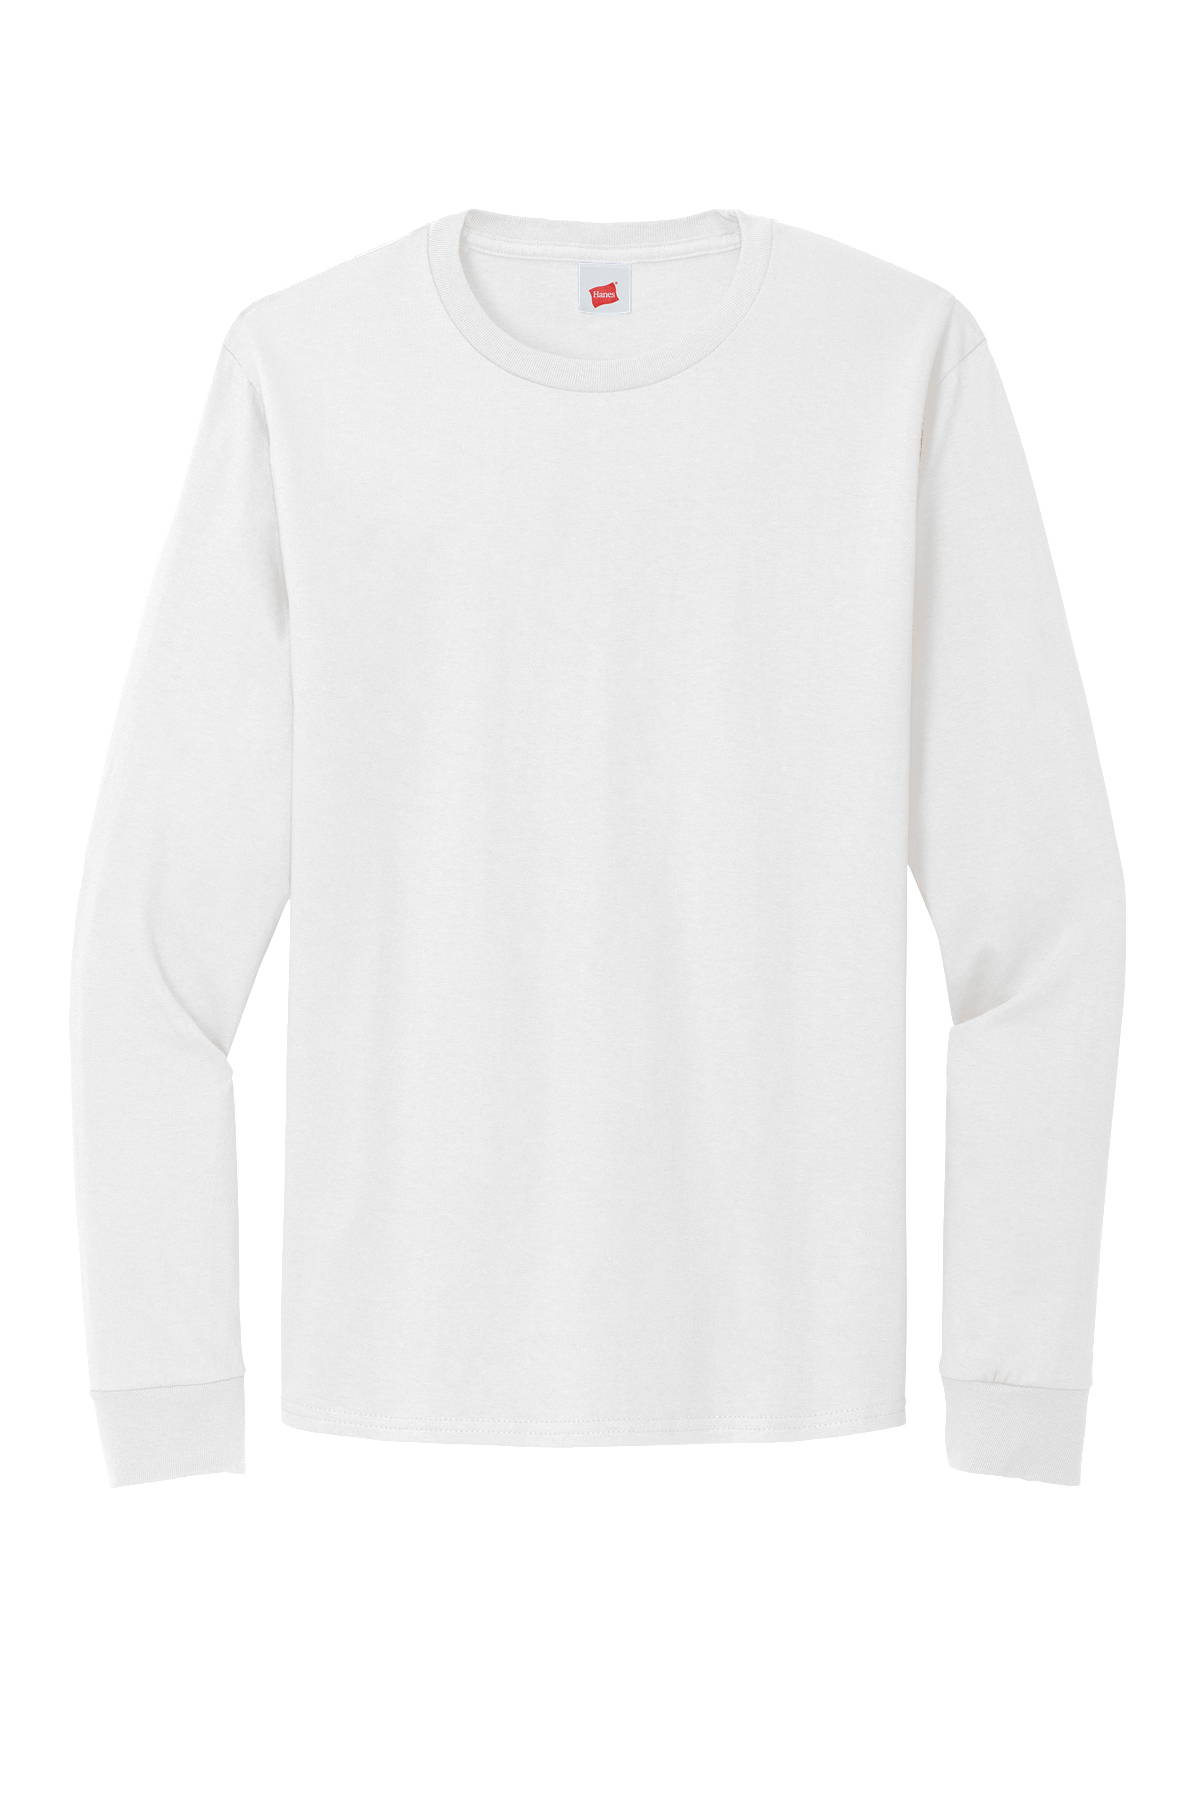 Hanes Essential-T 100% Cotton Long Sleeve T-Shirt | Product | SanMar